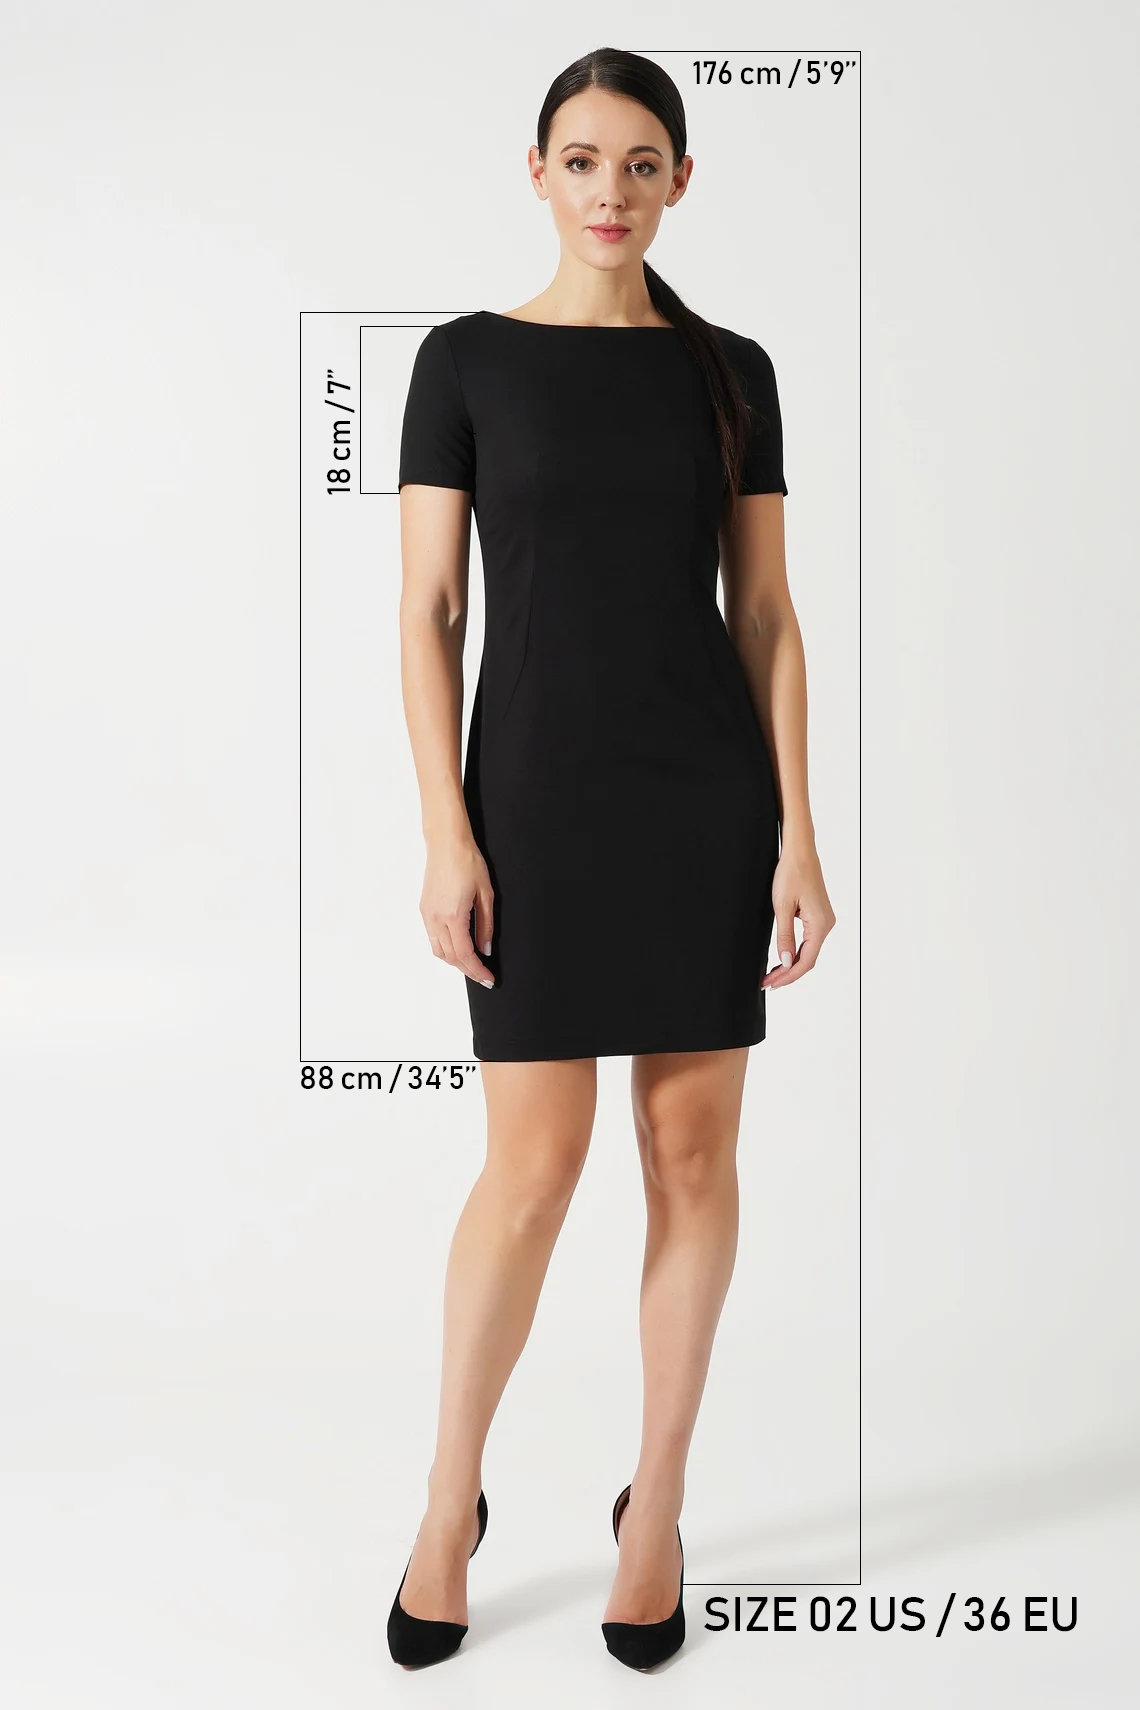 Simple Black Dress, Casual Pencil Dresses for Women, Boat Neck